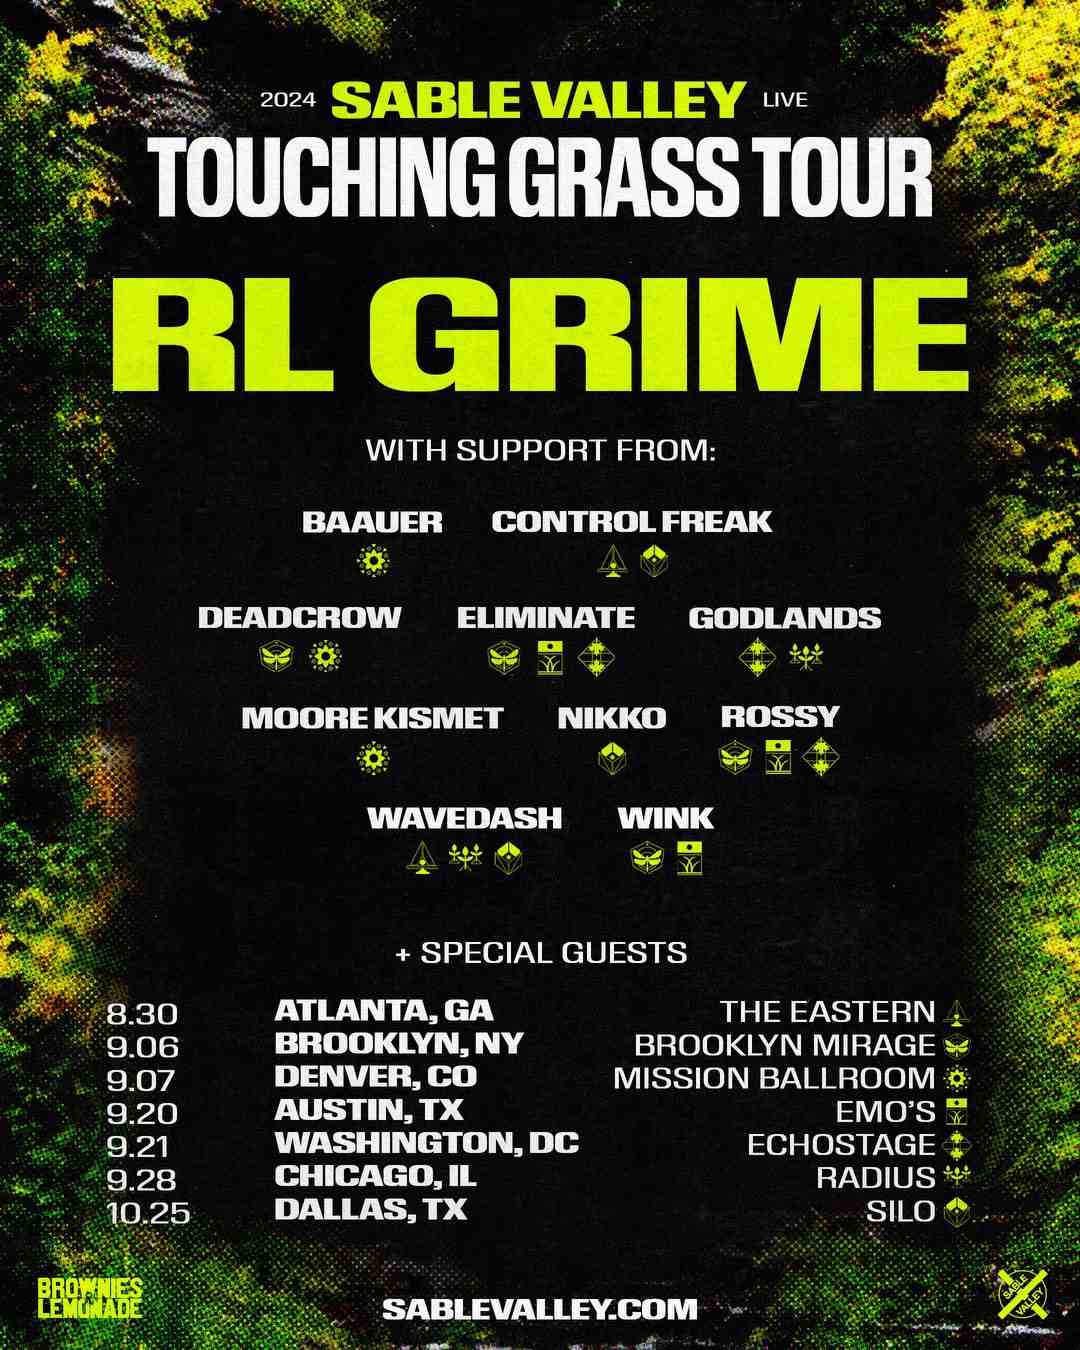 rl-grime-touching-grass-tour-2024-09-28-chicago